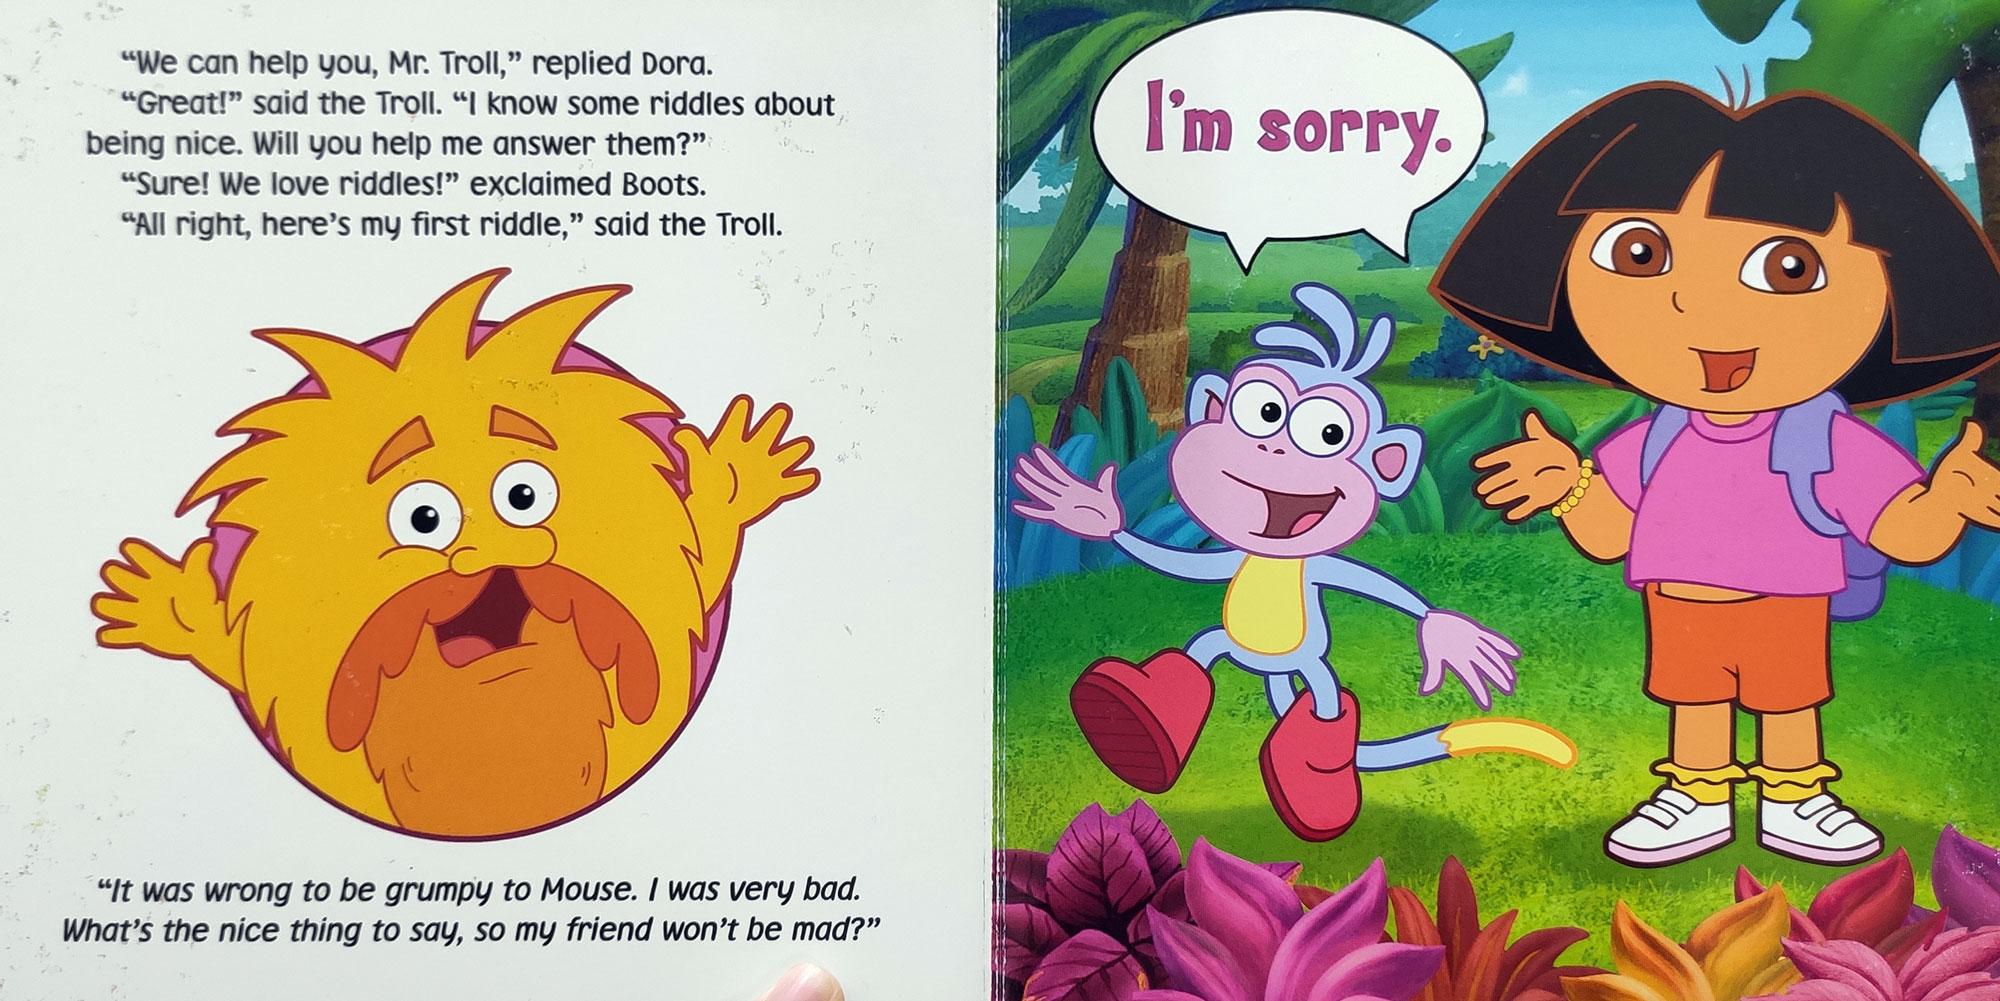 Dora The Explorer Manners Book